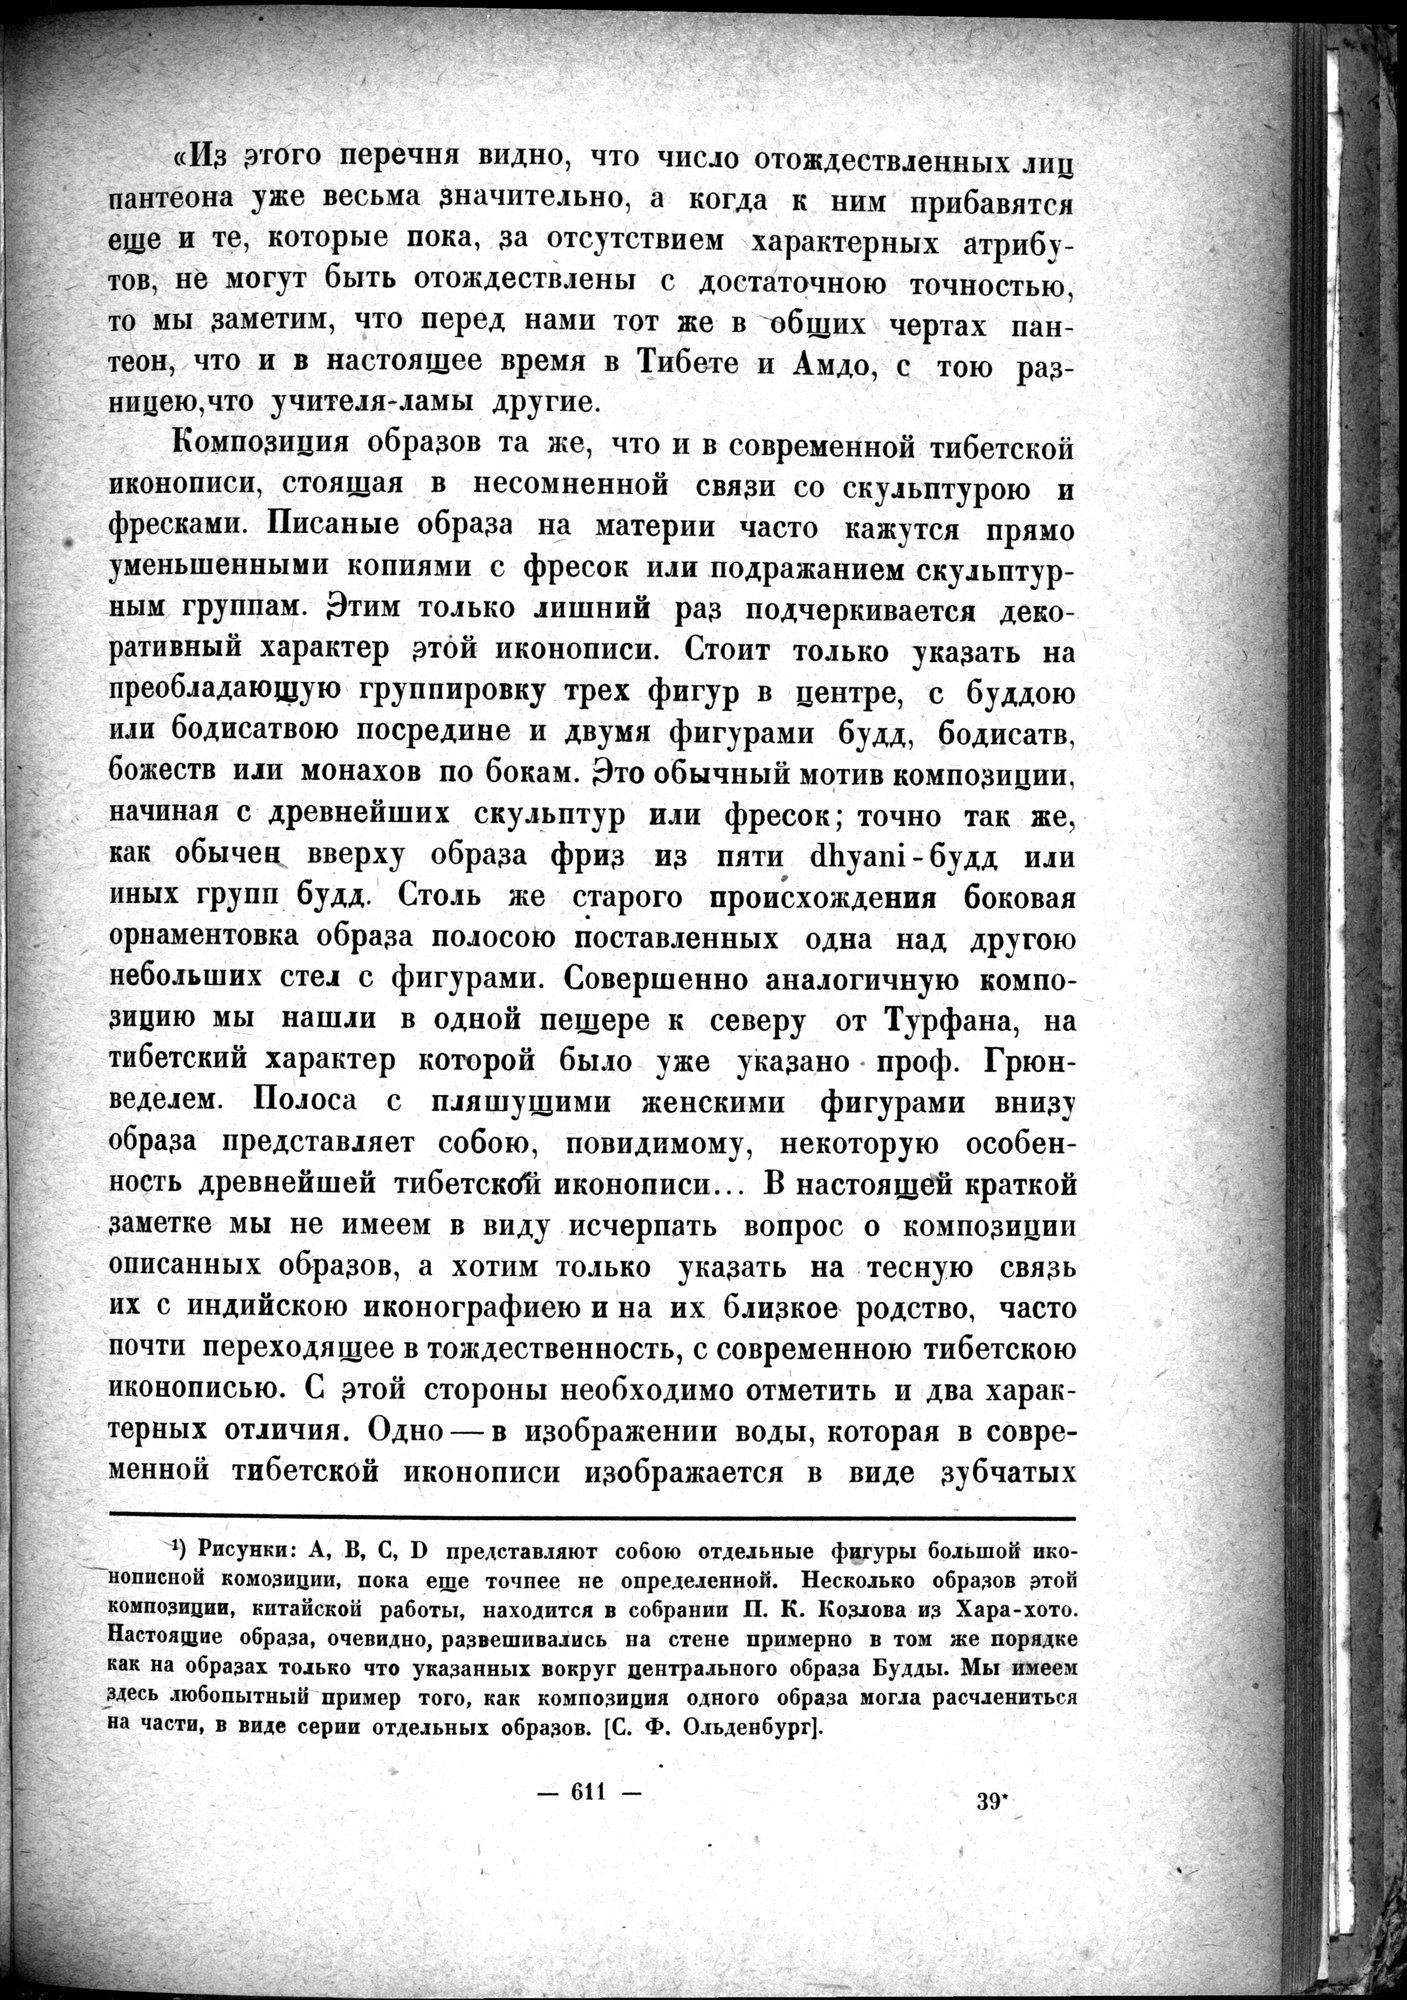 Mongoliya i Amdo i mertby gorod Khara-Khoto : vol.1 / Page 701 (Grayscale High Resolution Image)